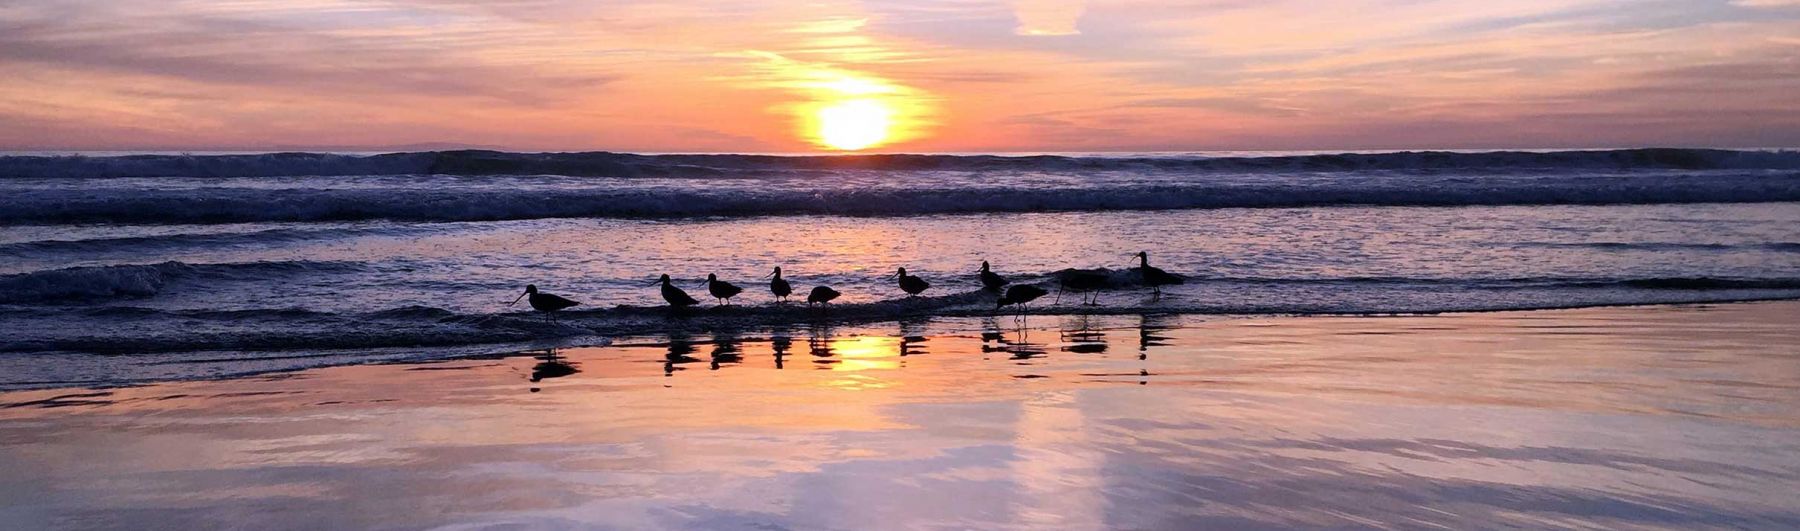 Birds at sunset.